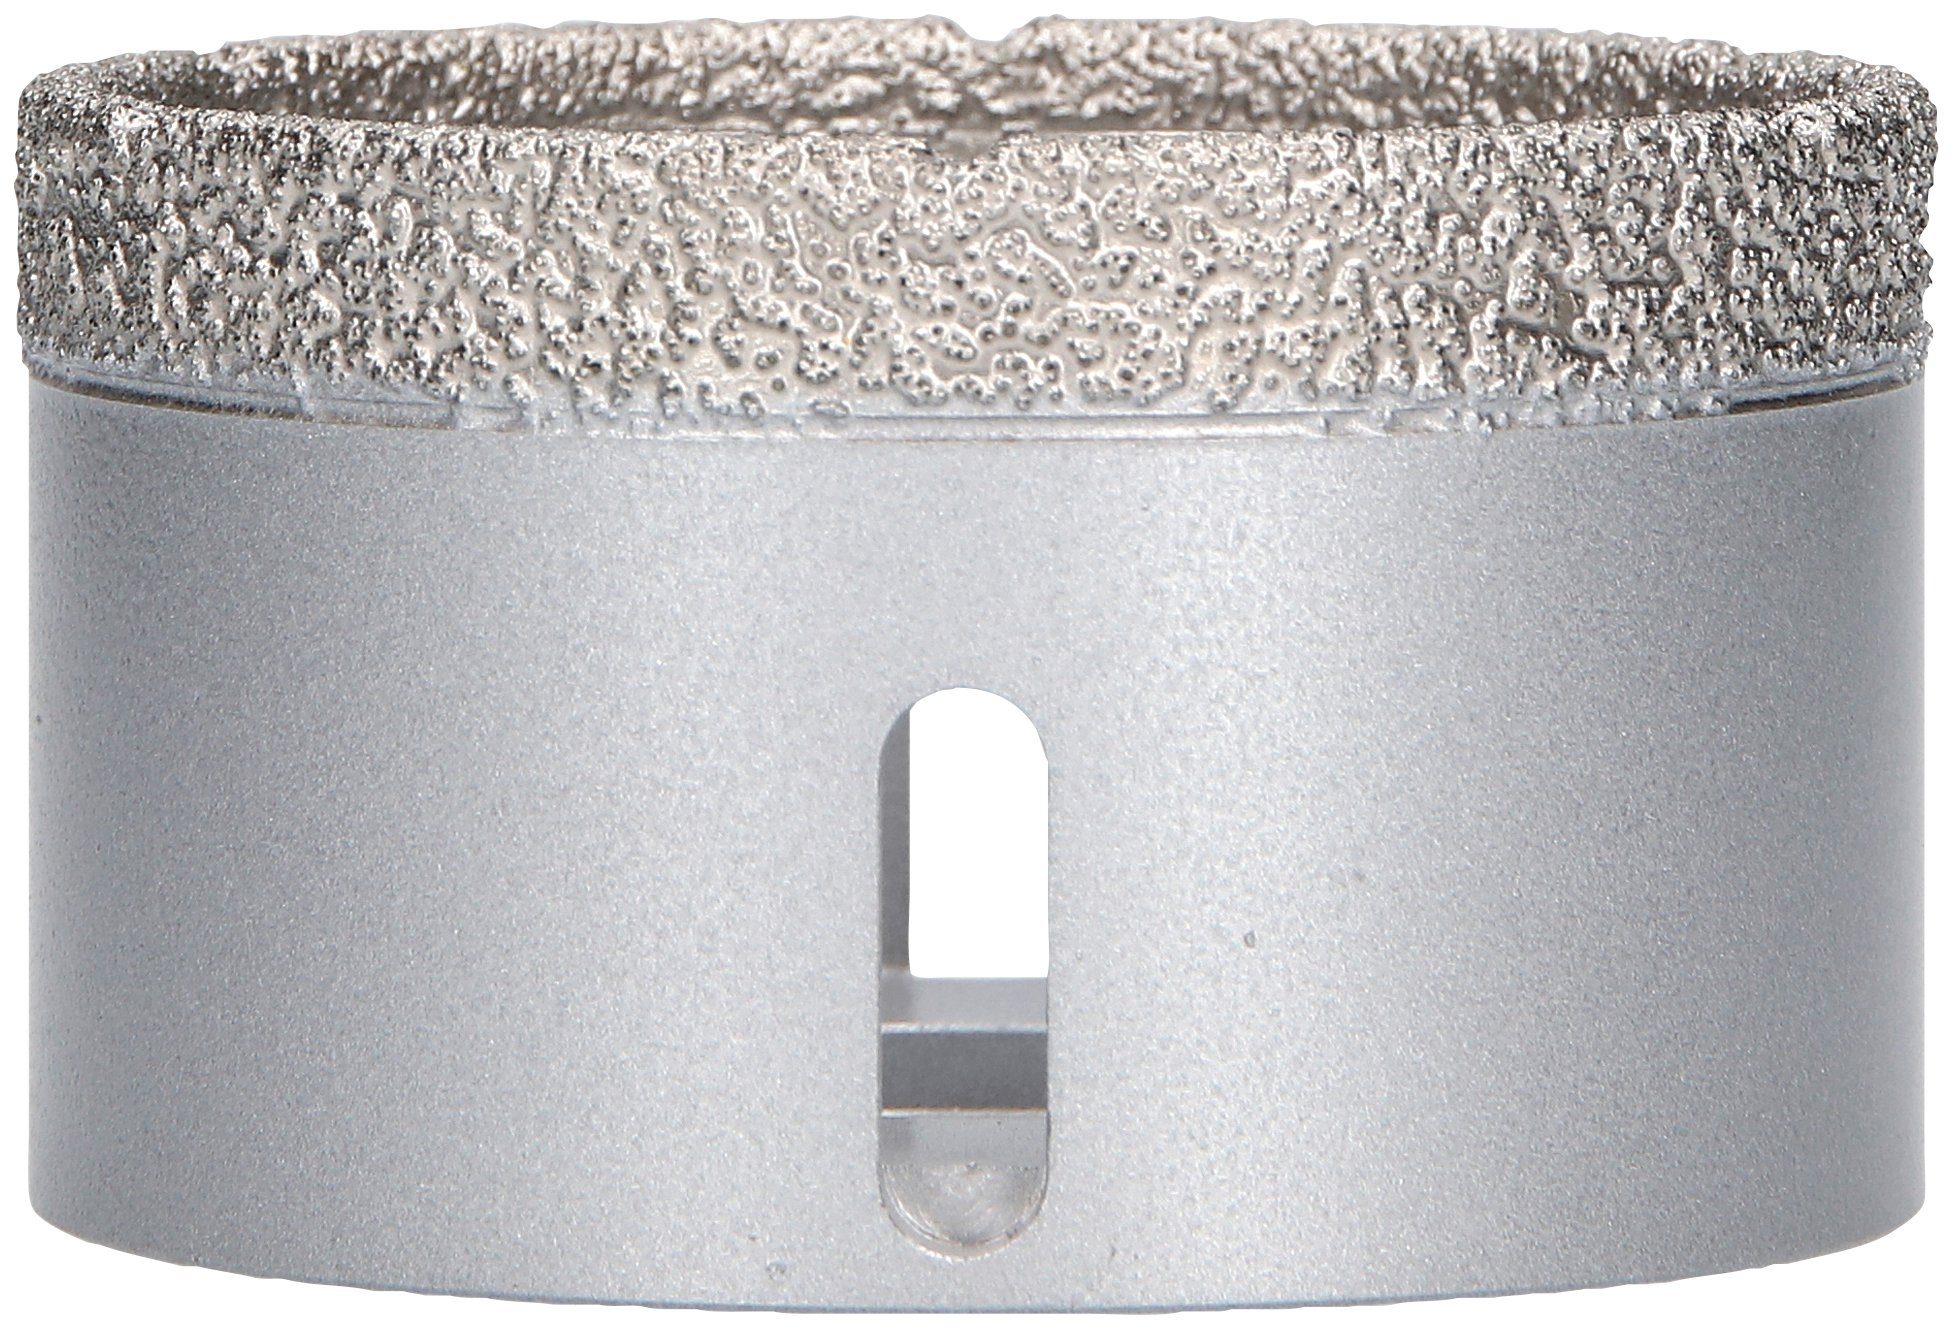 Bosch Speed, for X-LOCK mm, x Diamanttrockenbohrer Ø Dry mm 70 Professional Best Ceramic 35 70